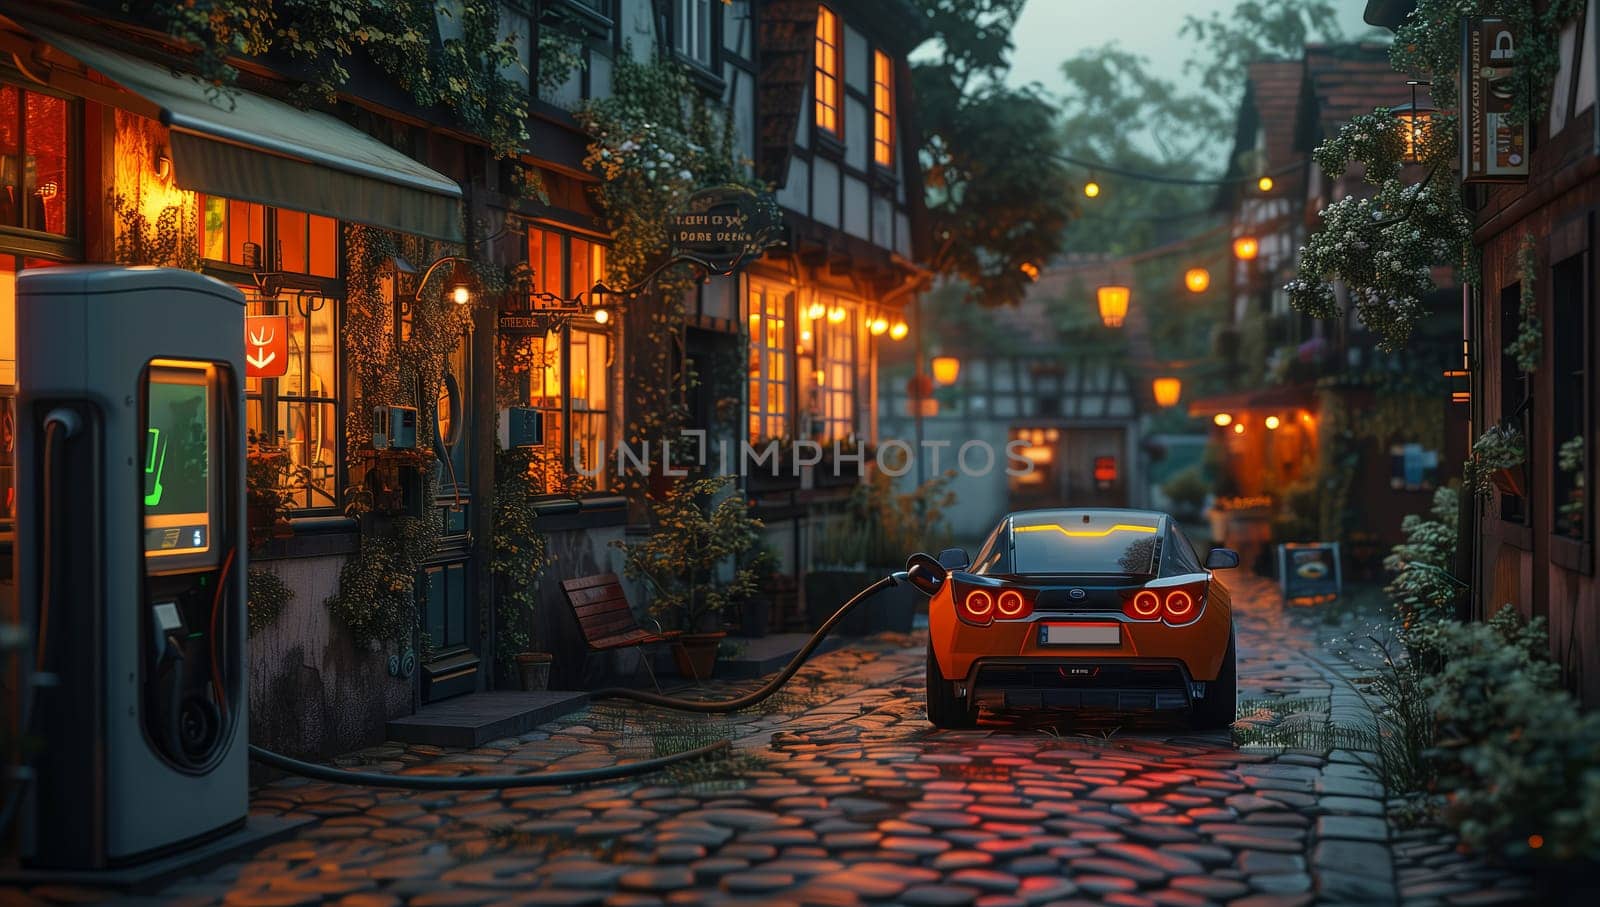 Car charging on cobblestone street under street lights by richwolf